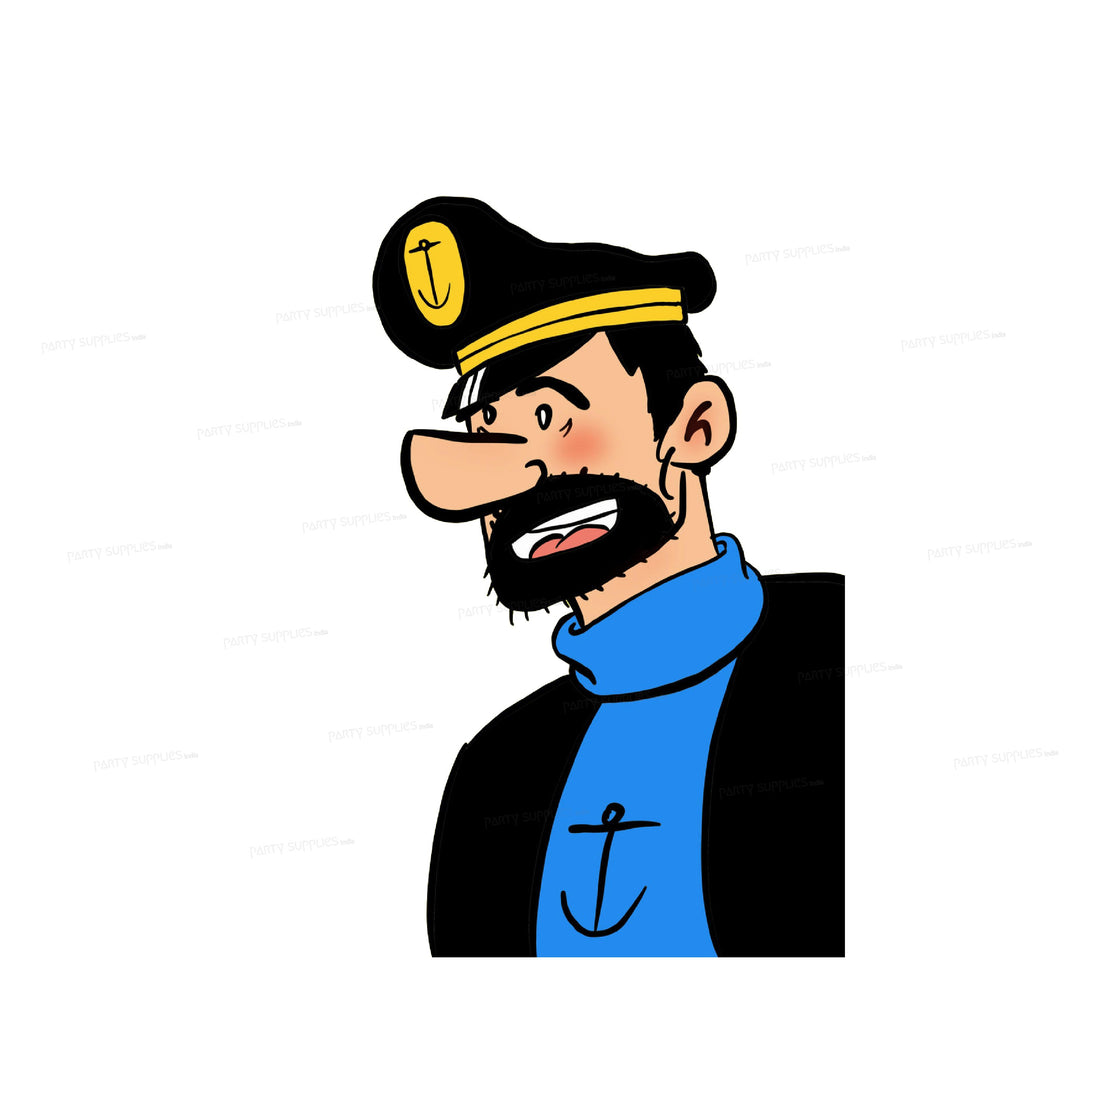 PSI Tintin Theme Cutout - 15